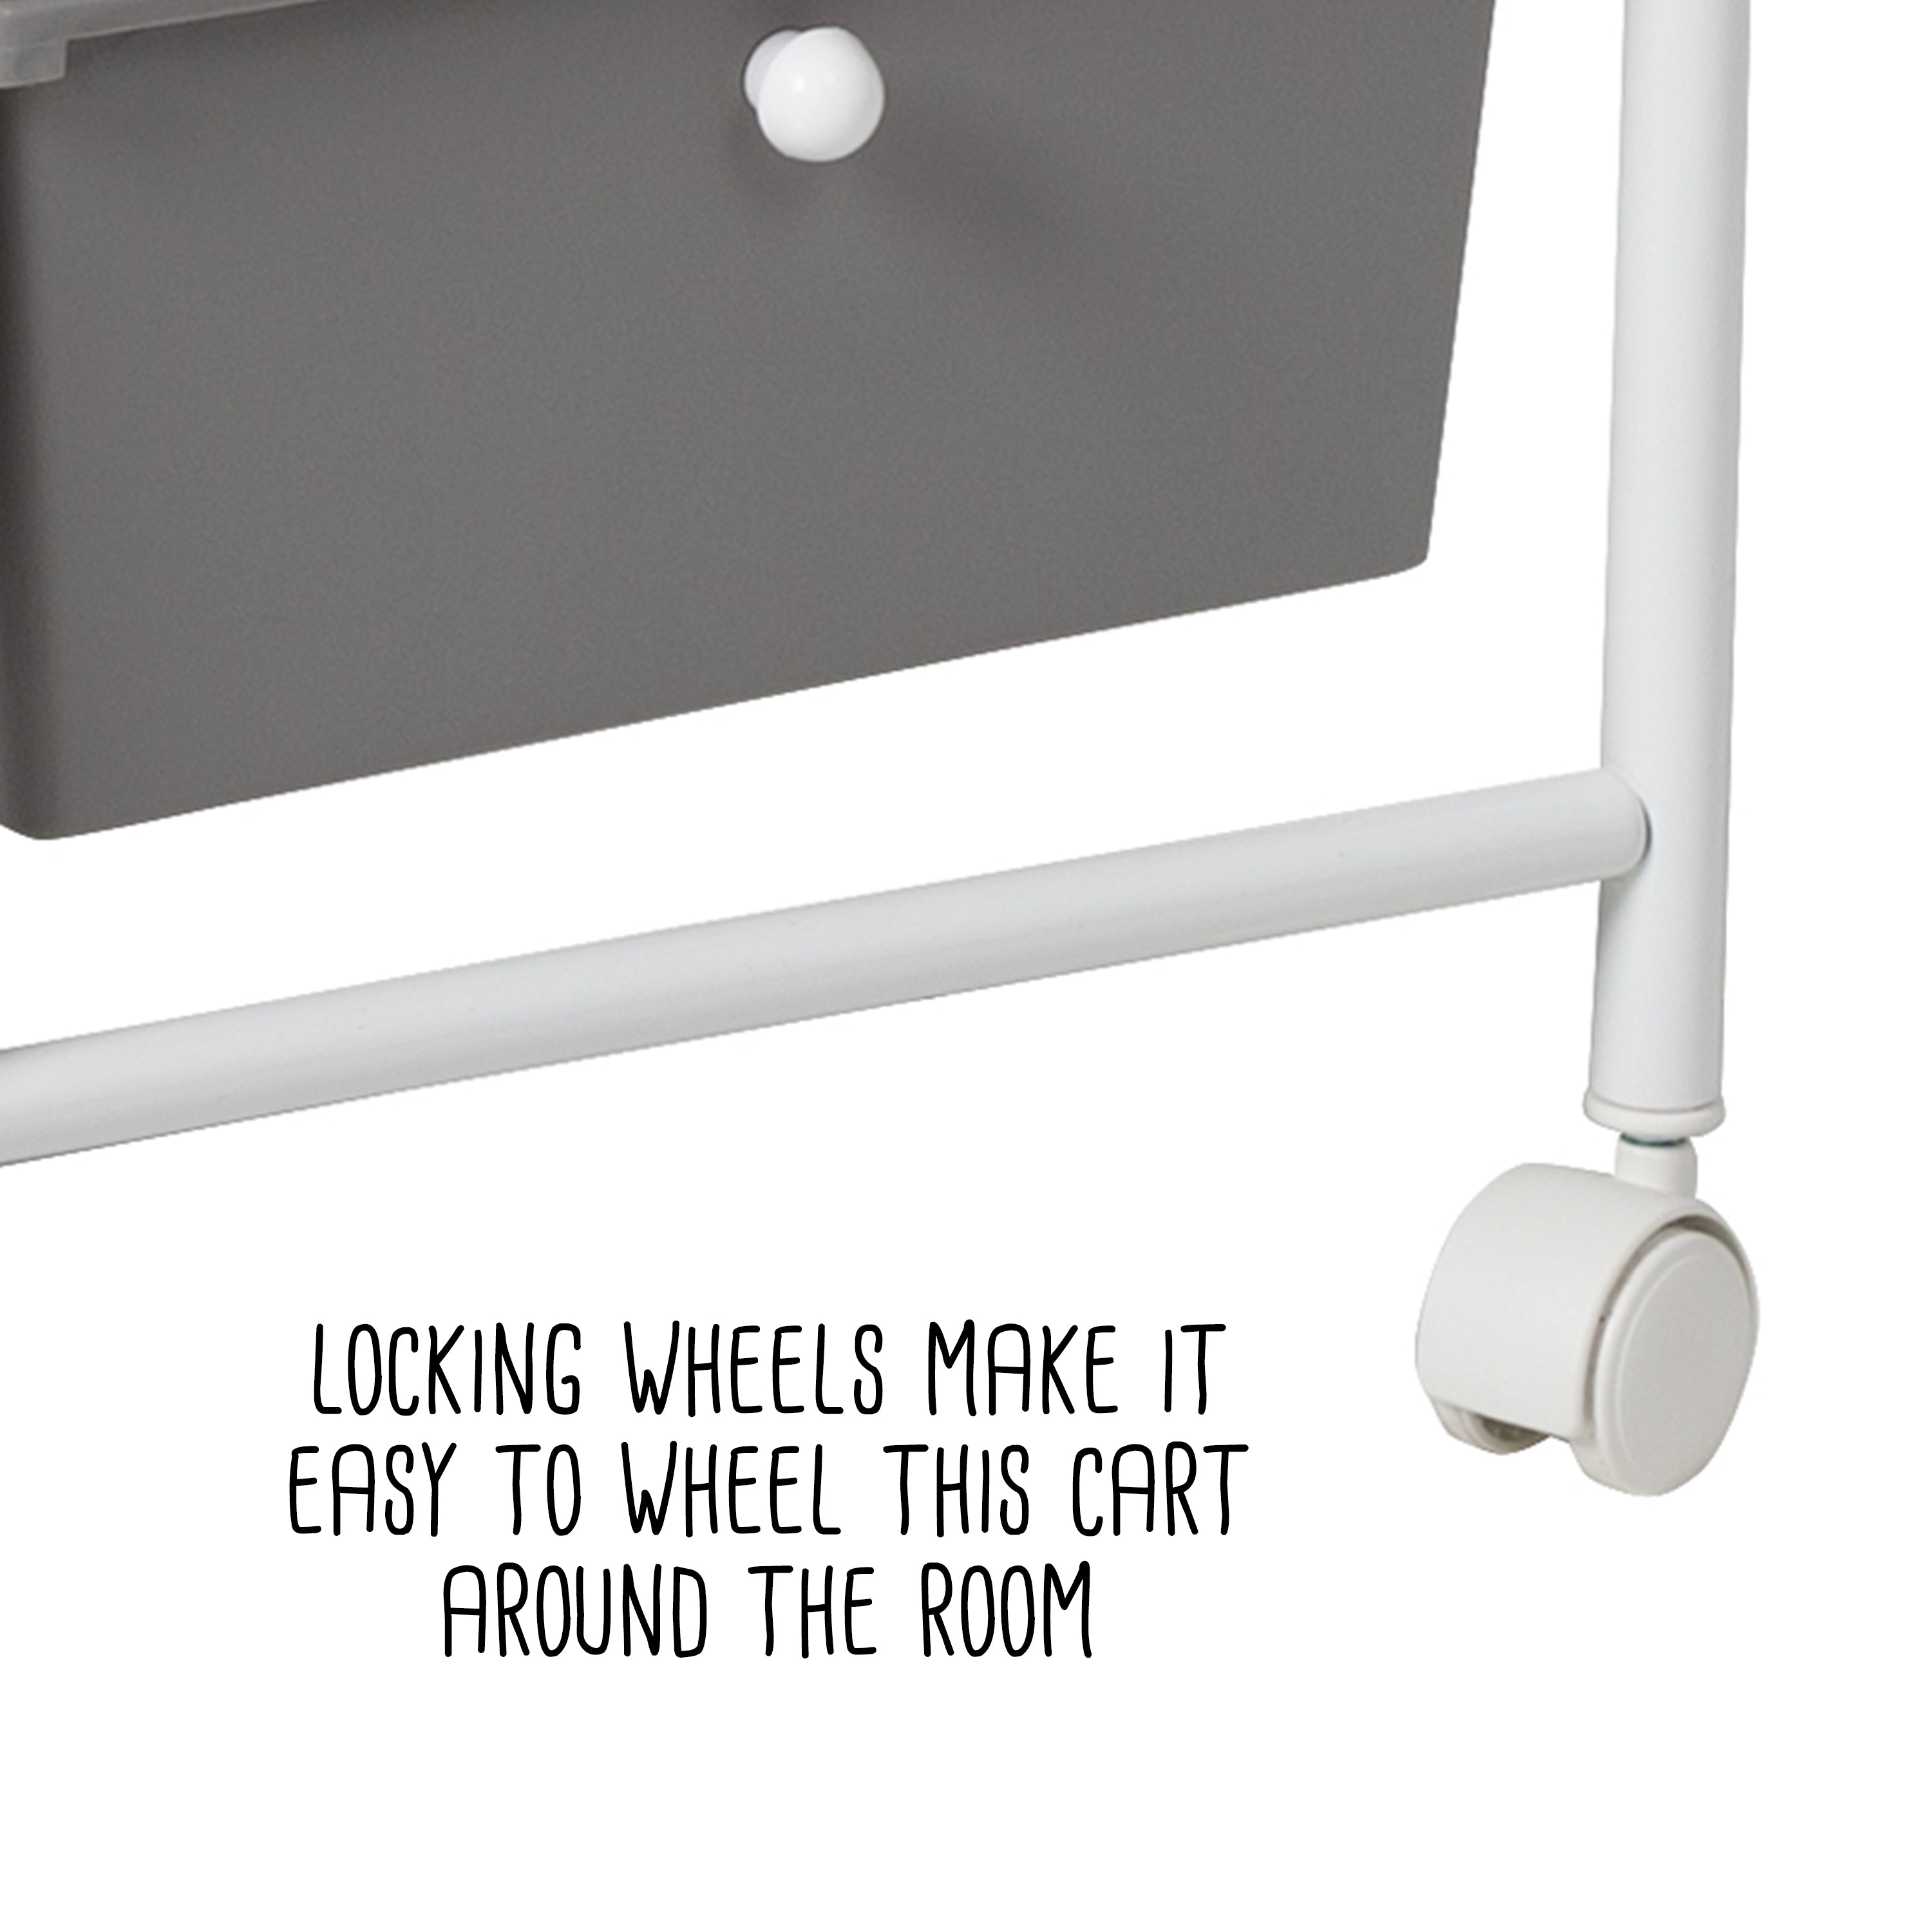 Large White 8-Drawer Storage Rolling Cart – Community Furnishings